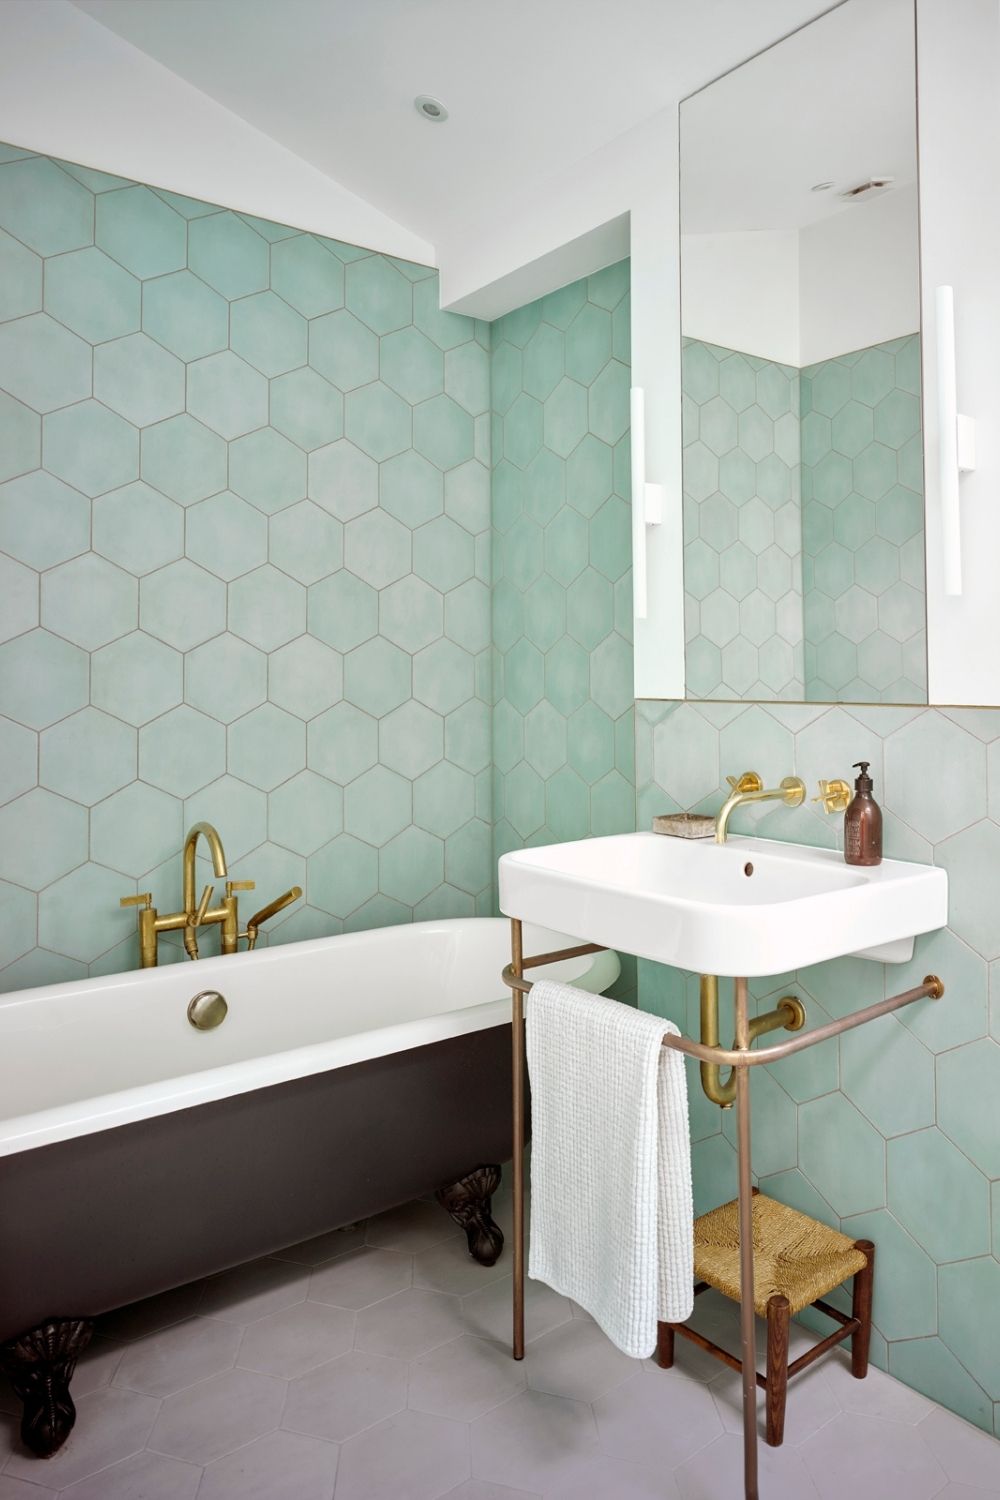 evoke projects ltd bespoke bathroom design